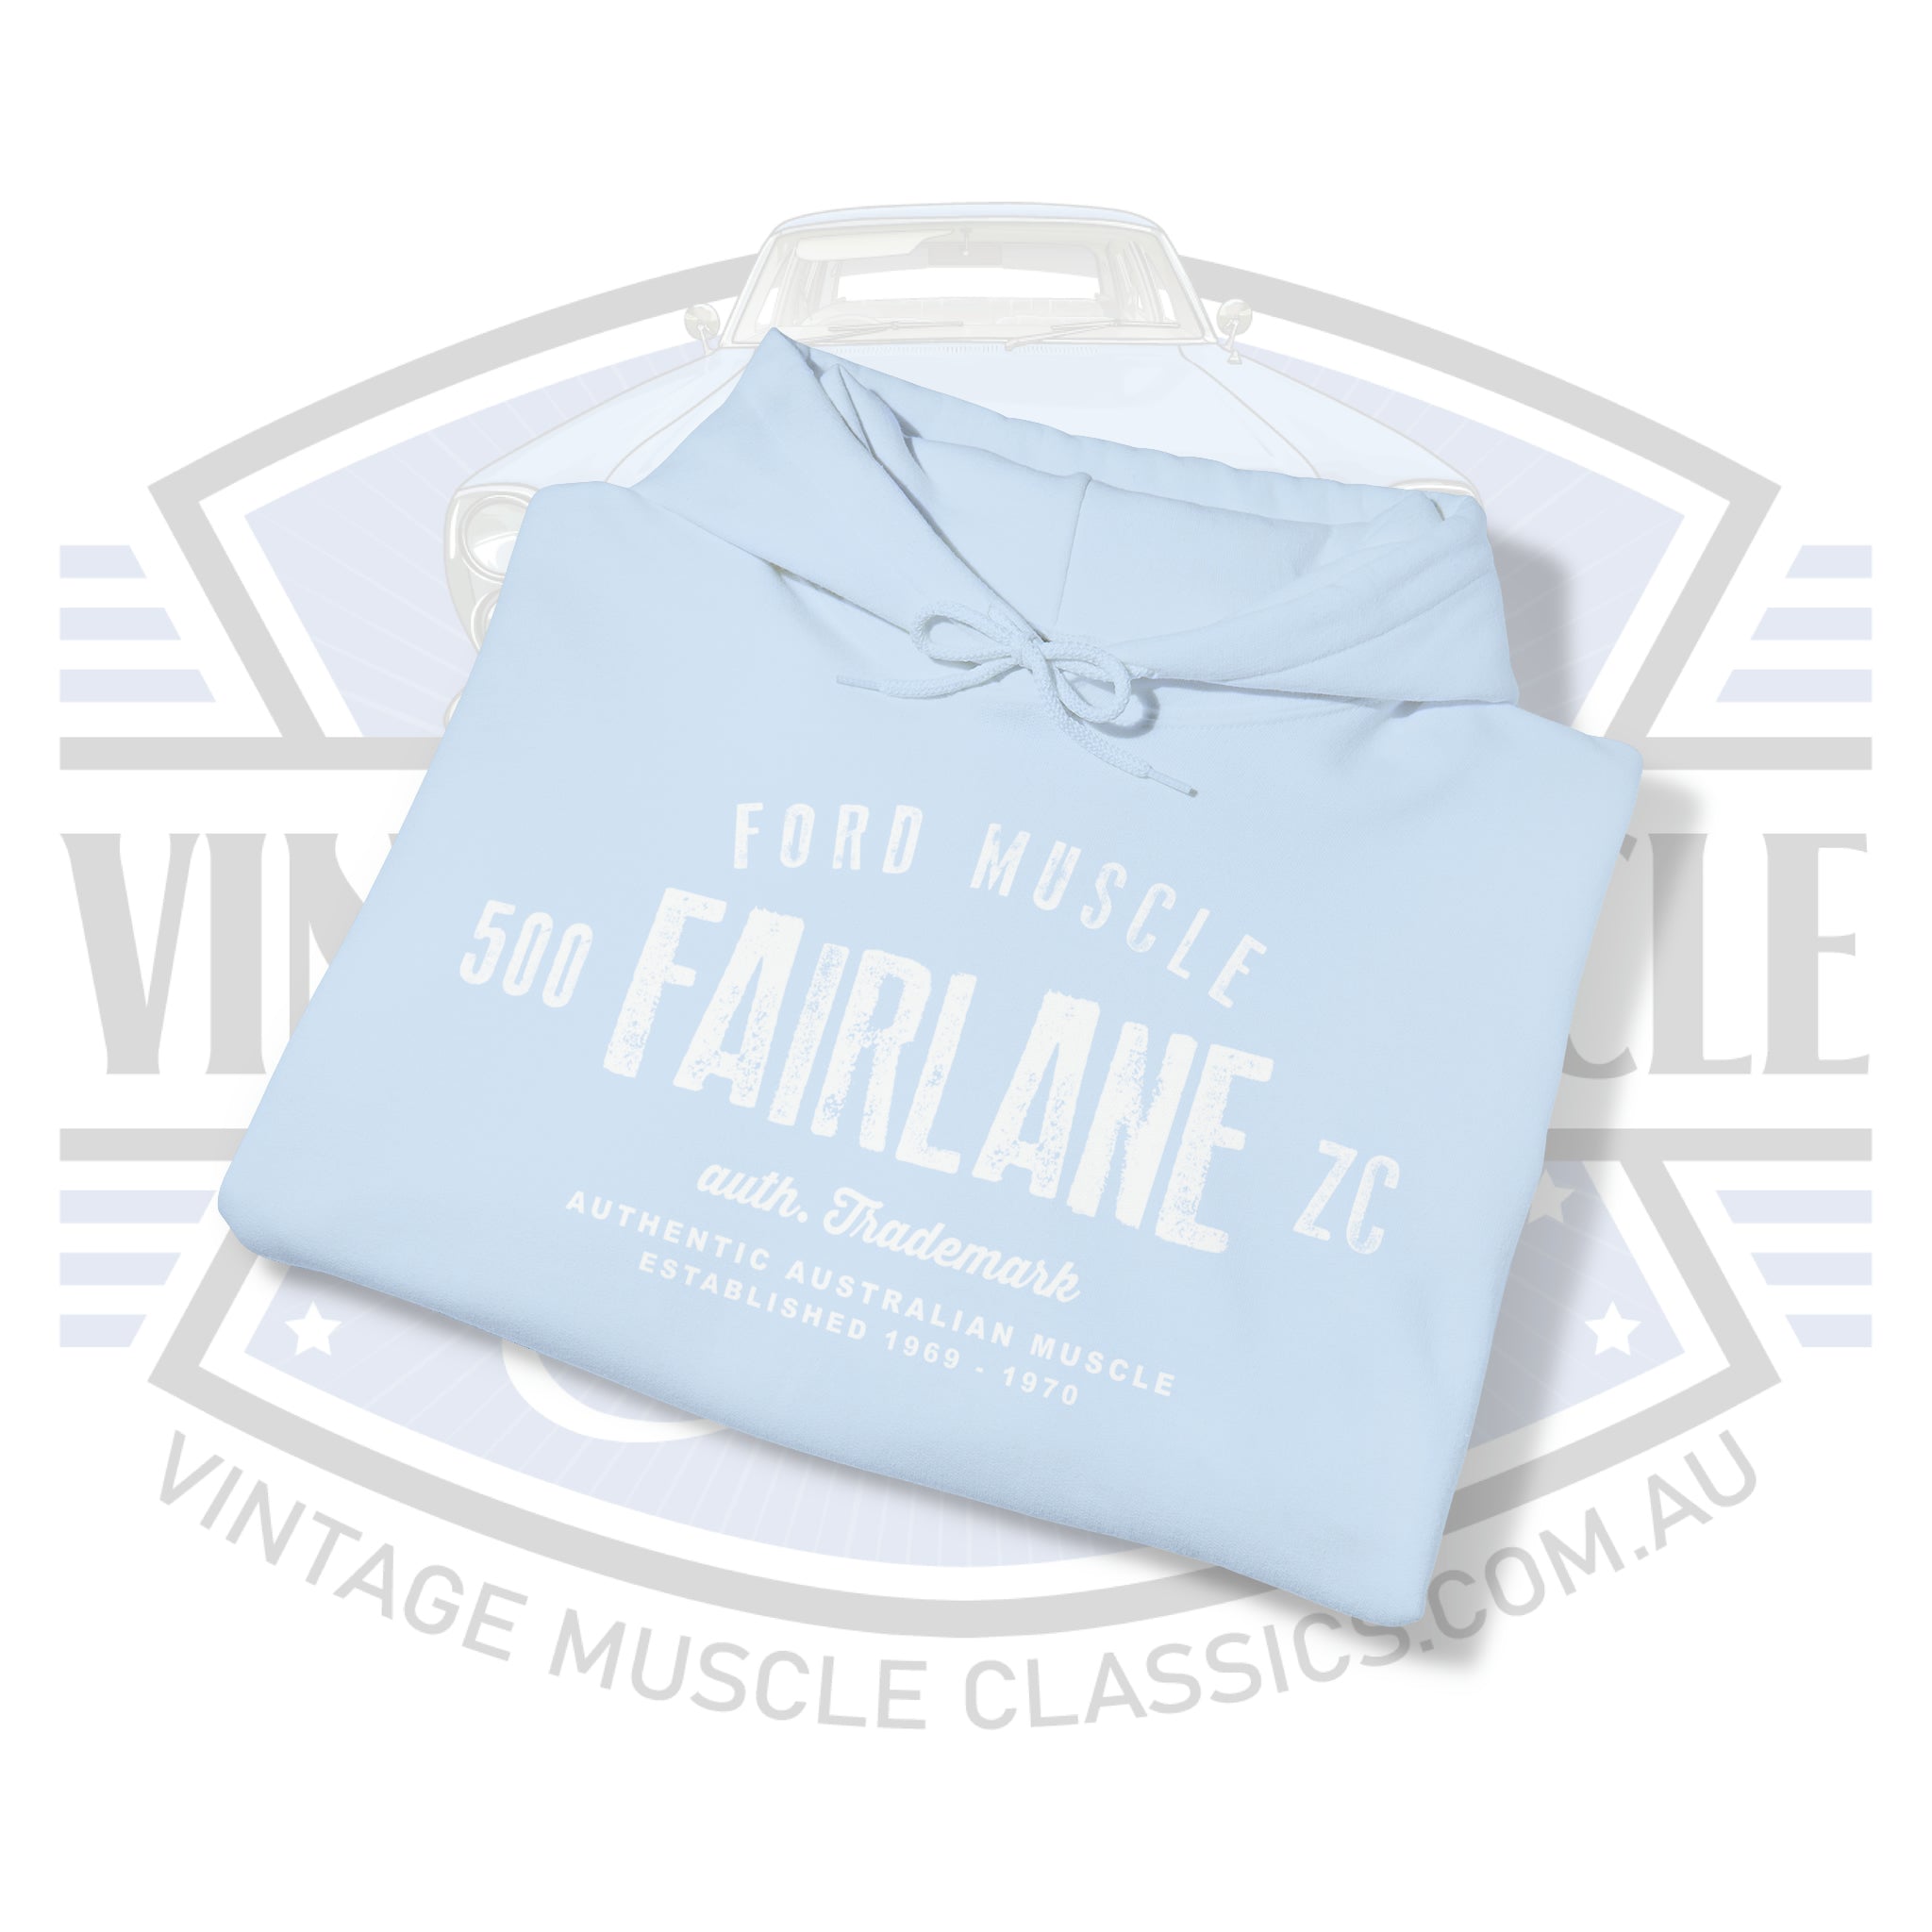 Fairlane ZC - Unisex Heavy Blend™ Hooded Sweatshirt